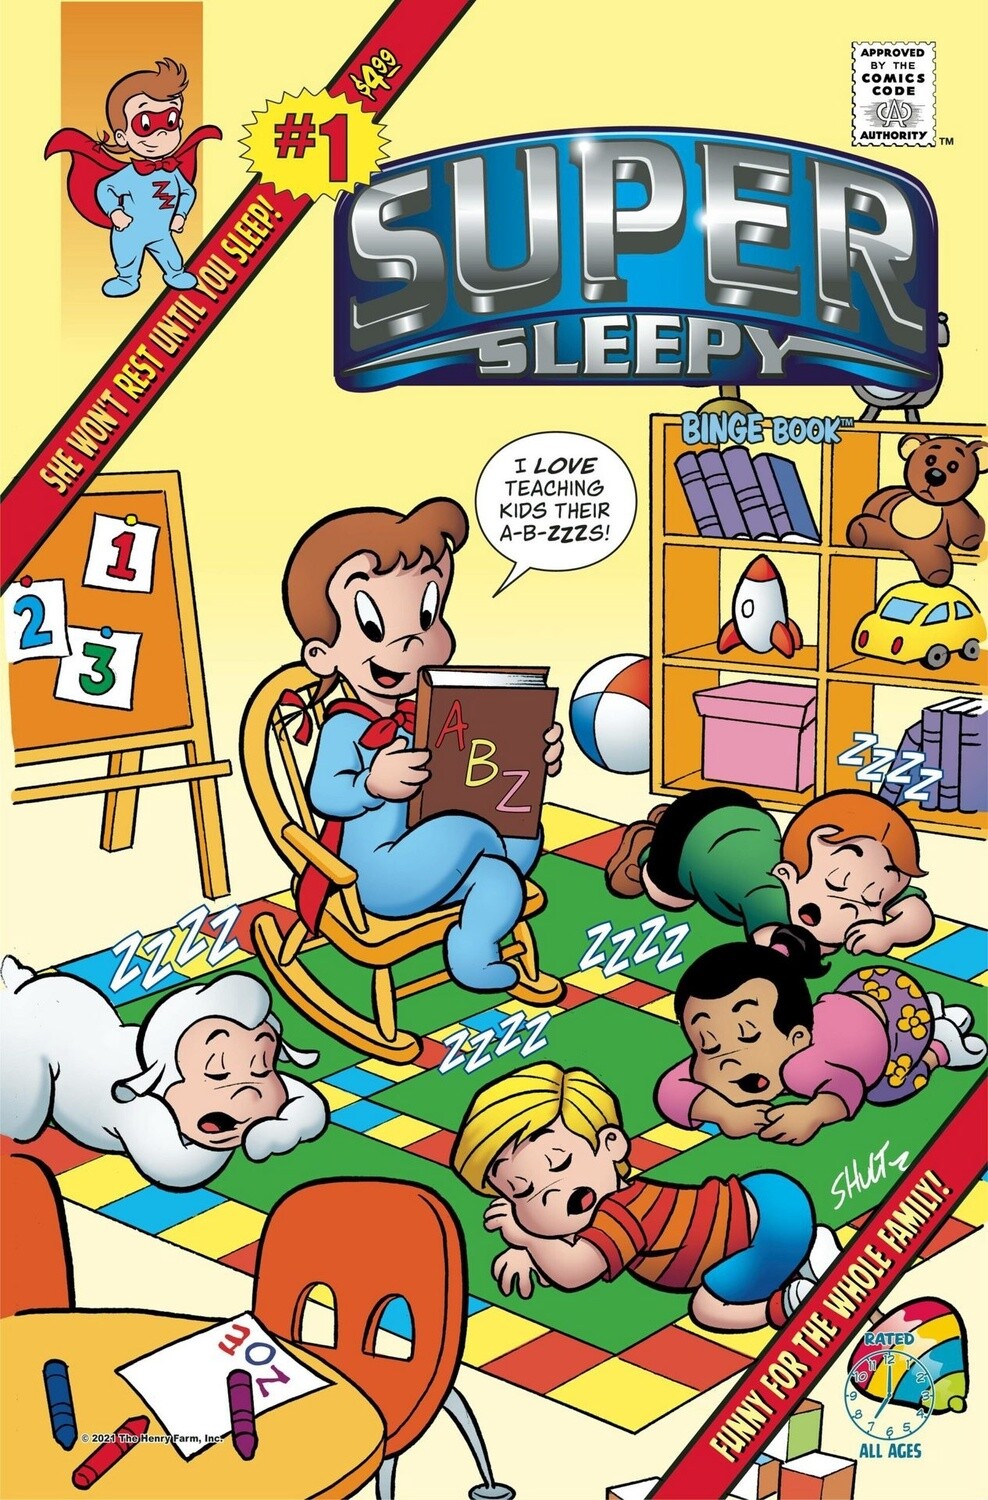 Super Sleepy #1: Bedtime Stories